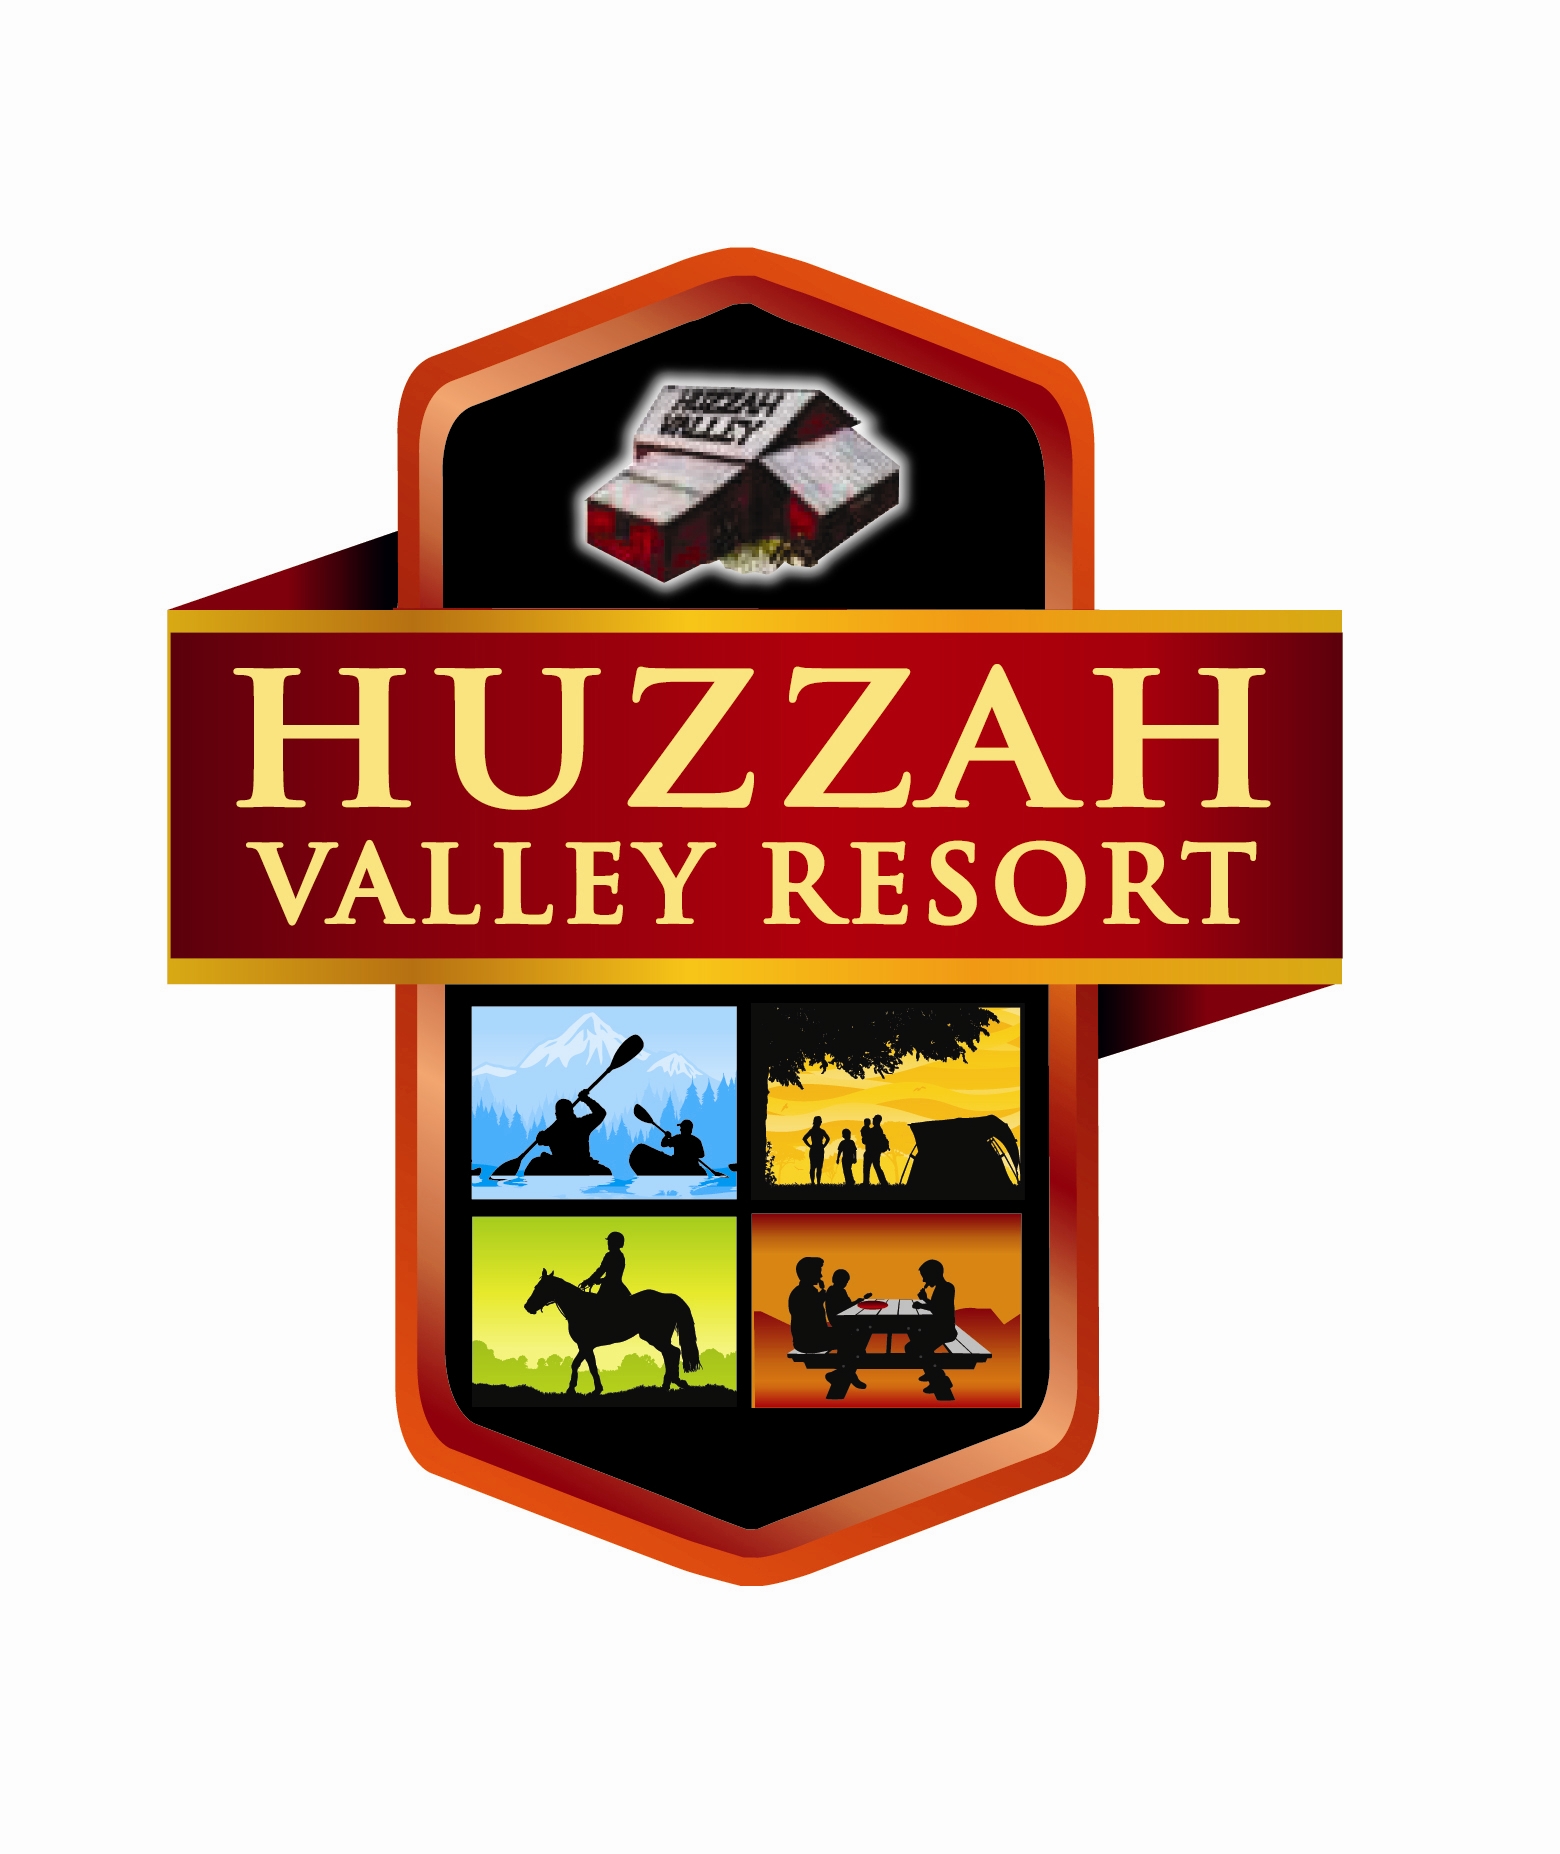 Huzzah valley float trip